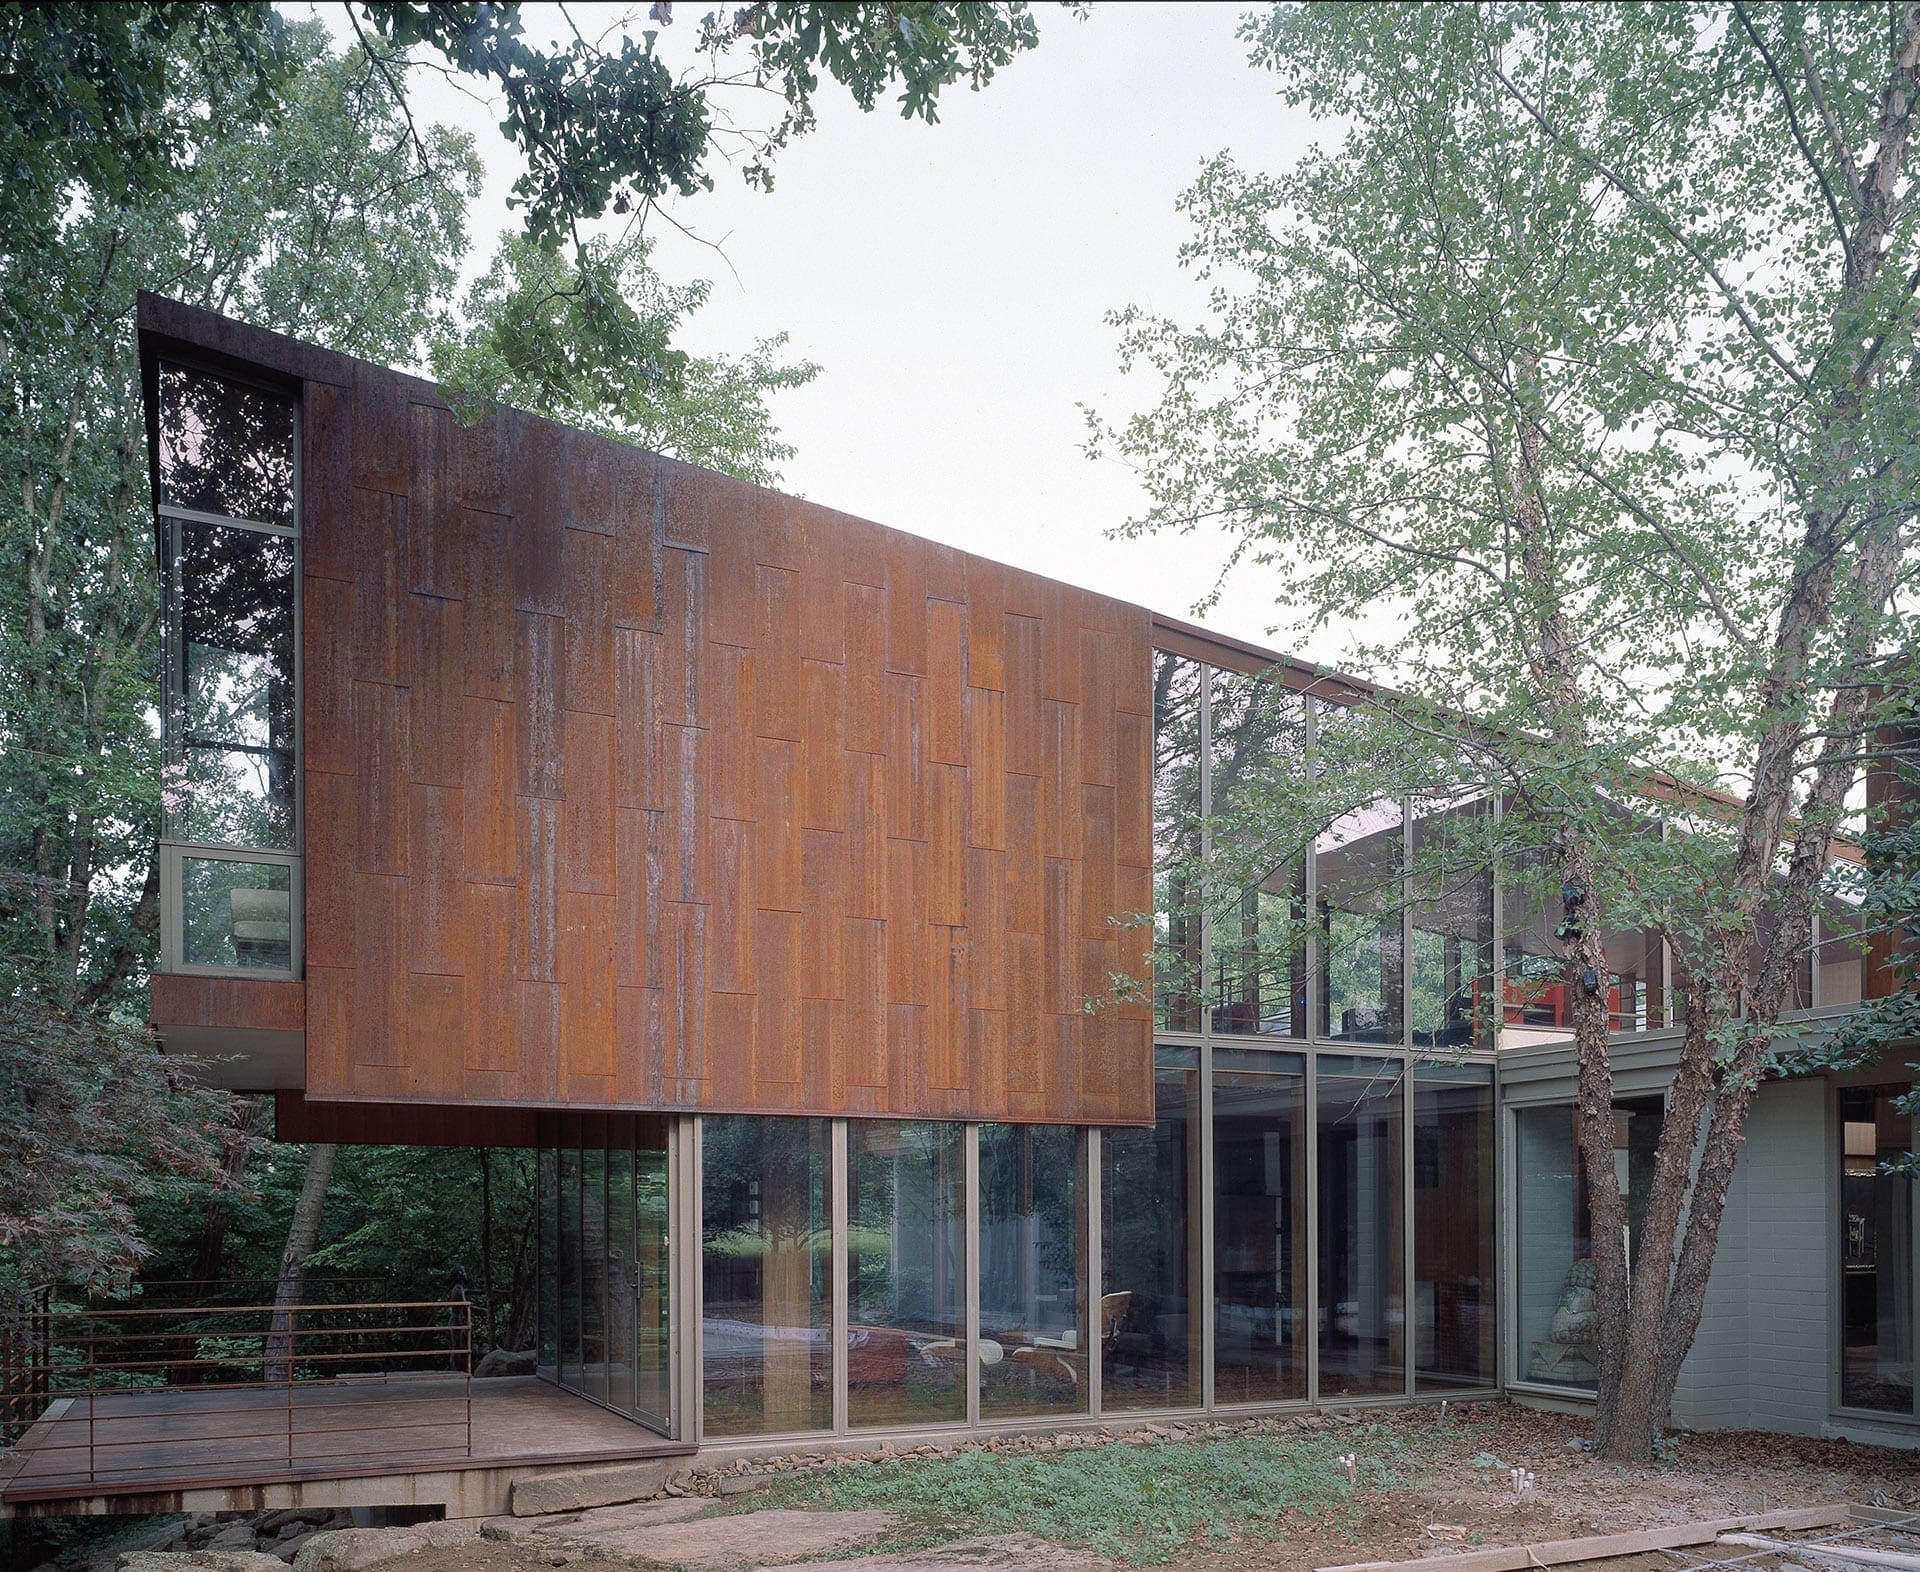 Arkansas House designed by Marlon Blackwell.